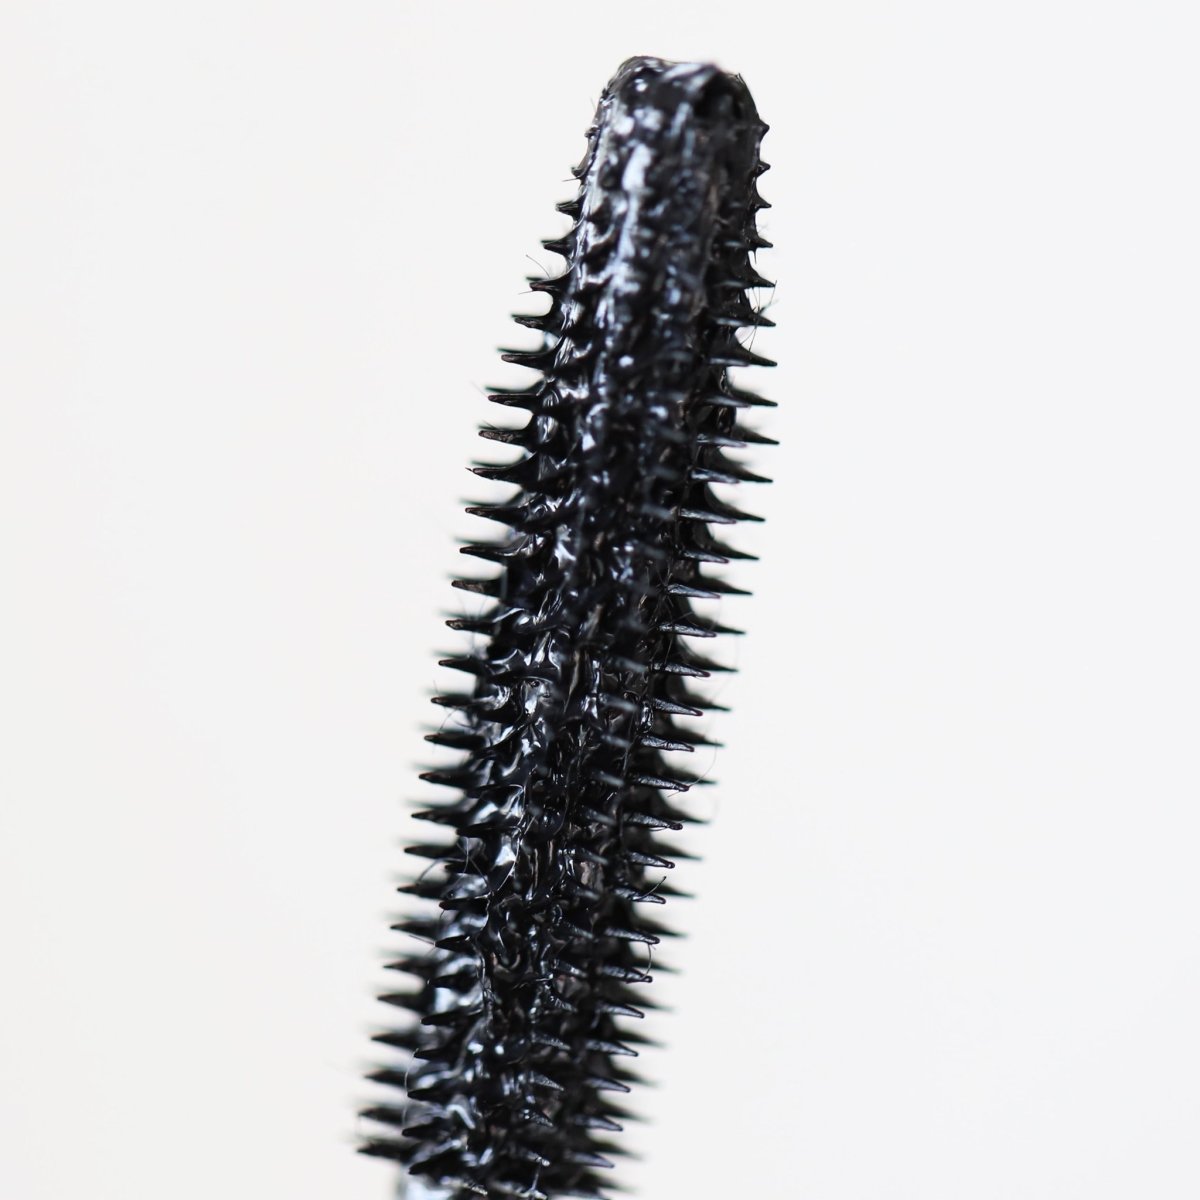 closeup of black plastic cone applicator - totally tubular mascara, the heights - half caked makeup